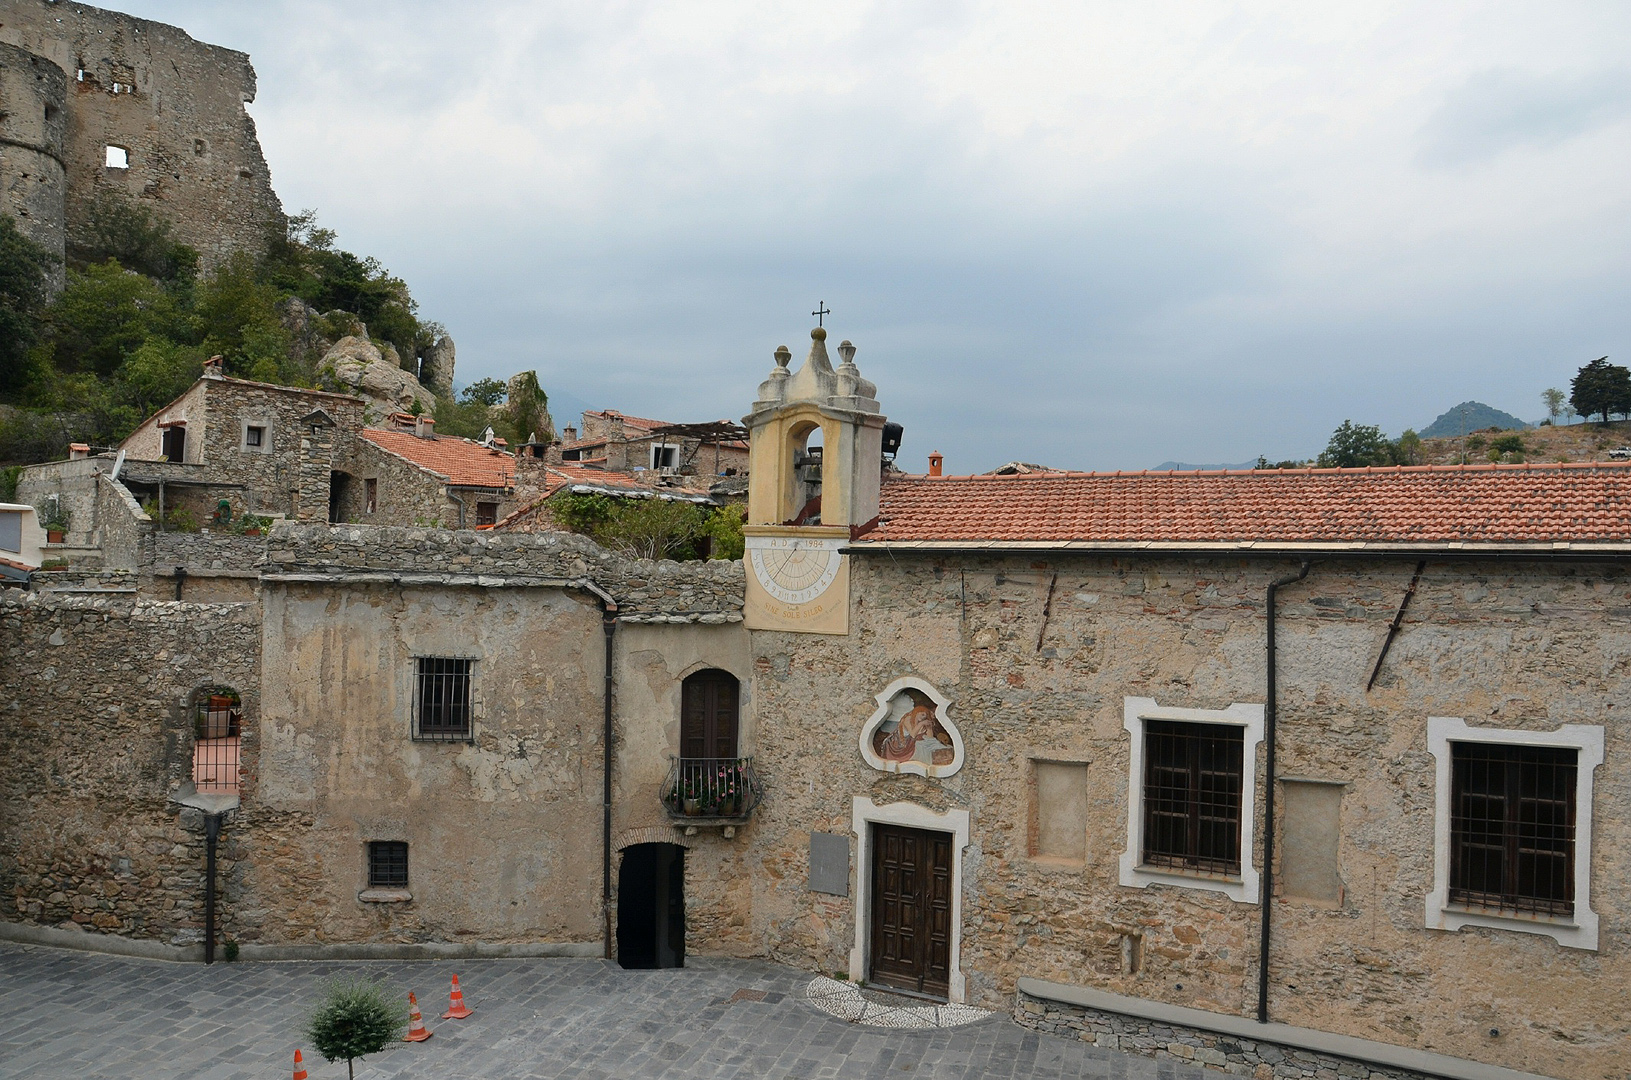 Castelvecchio di Rocca Barbena (Ligurië, Italië), Castelvecchio di Rocca Barbena (Liguria, Italy)